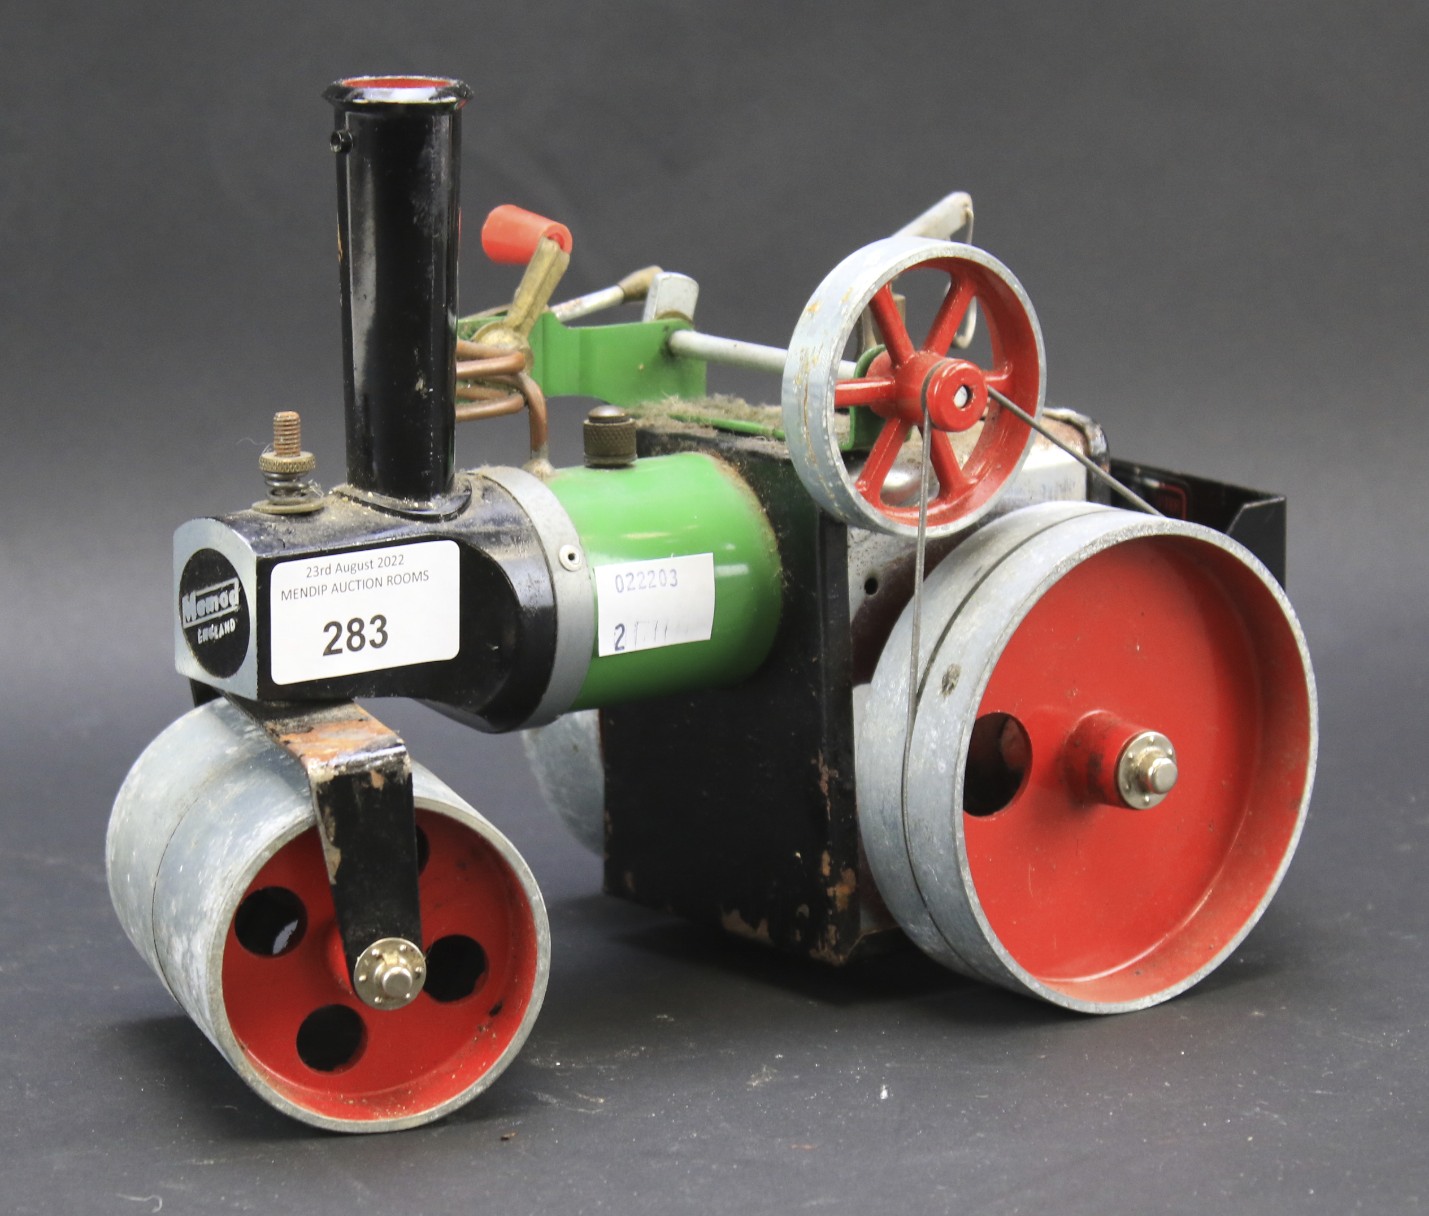 A Mamod steam roller.